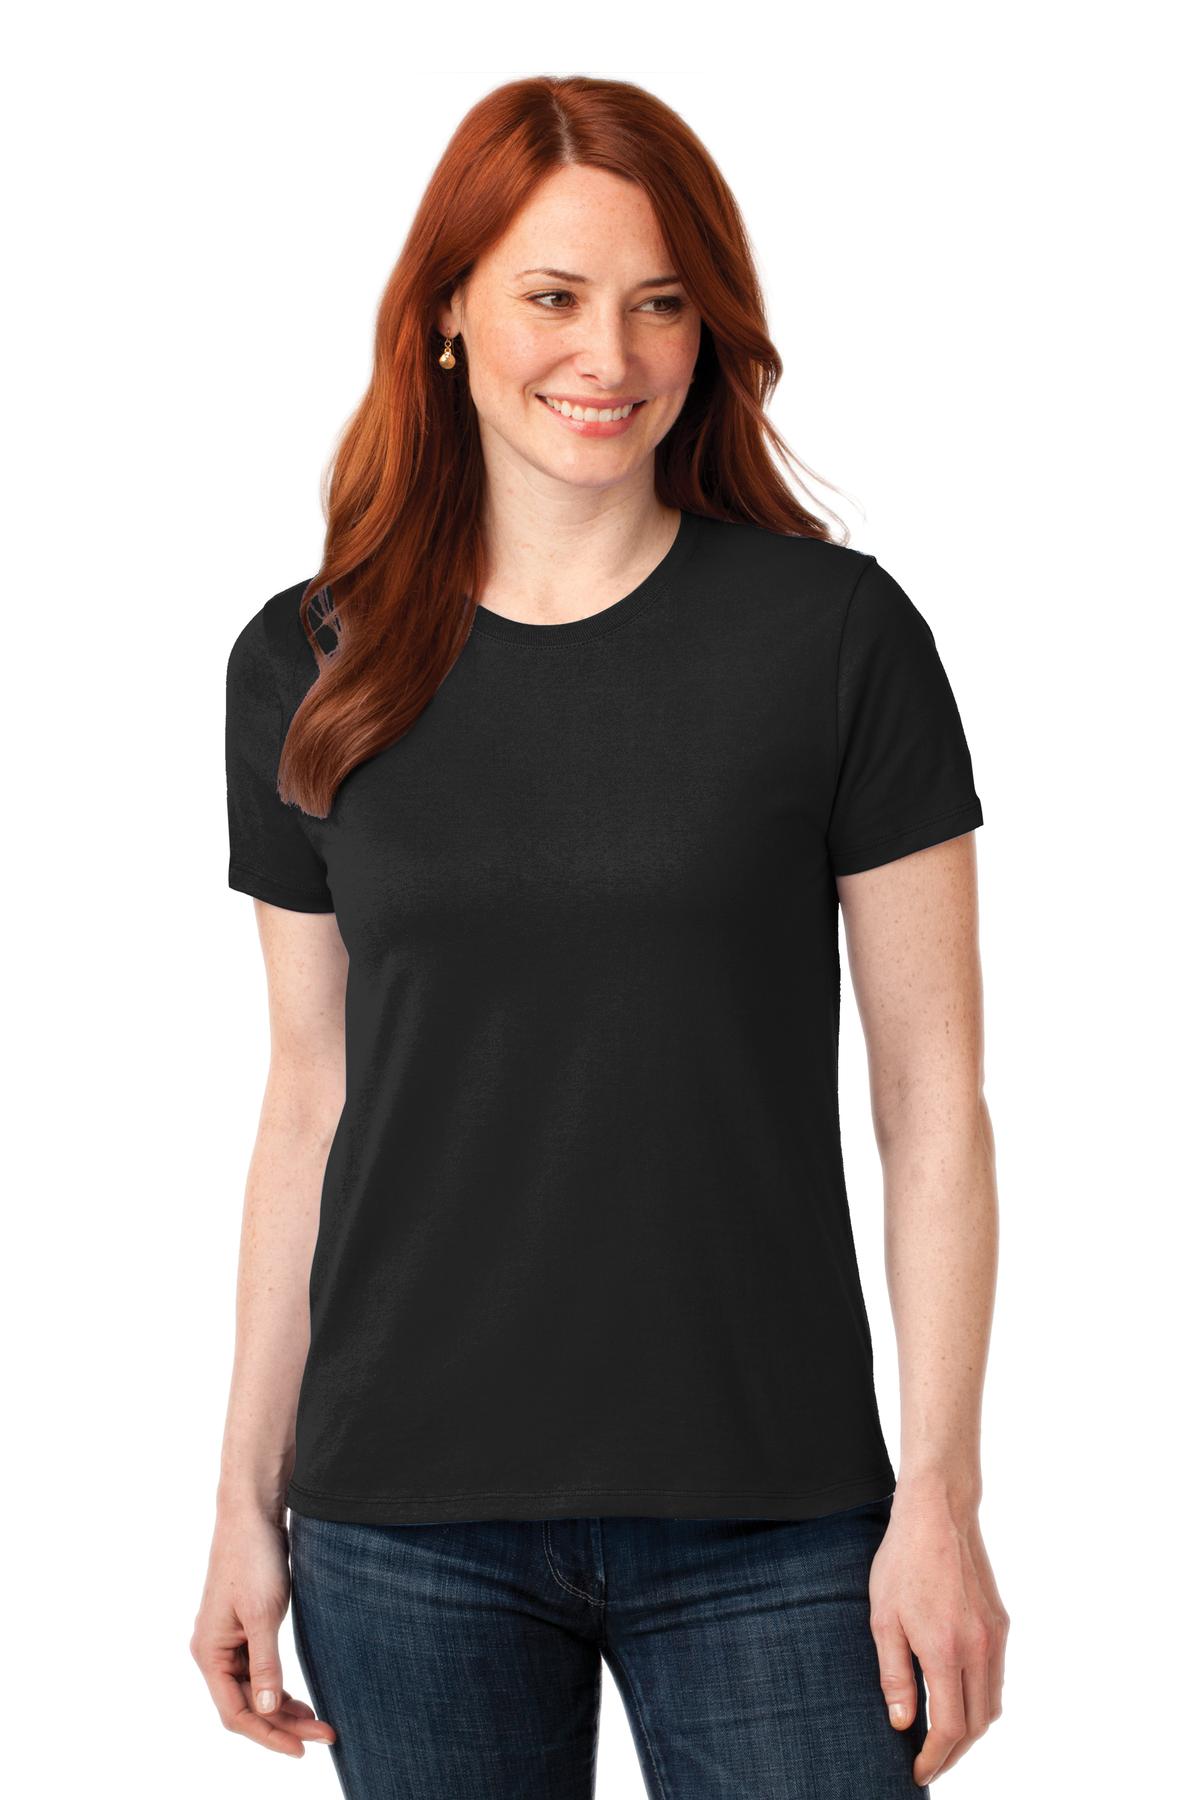 FOH – Women’s Blank T-shirt: Ladies Core Blend Tee. LPC55 – Black